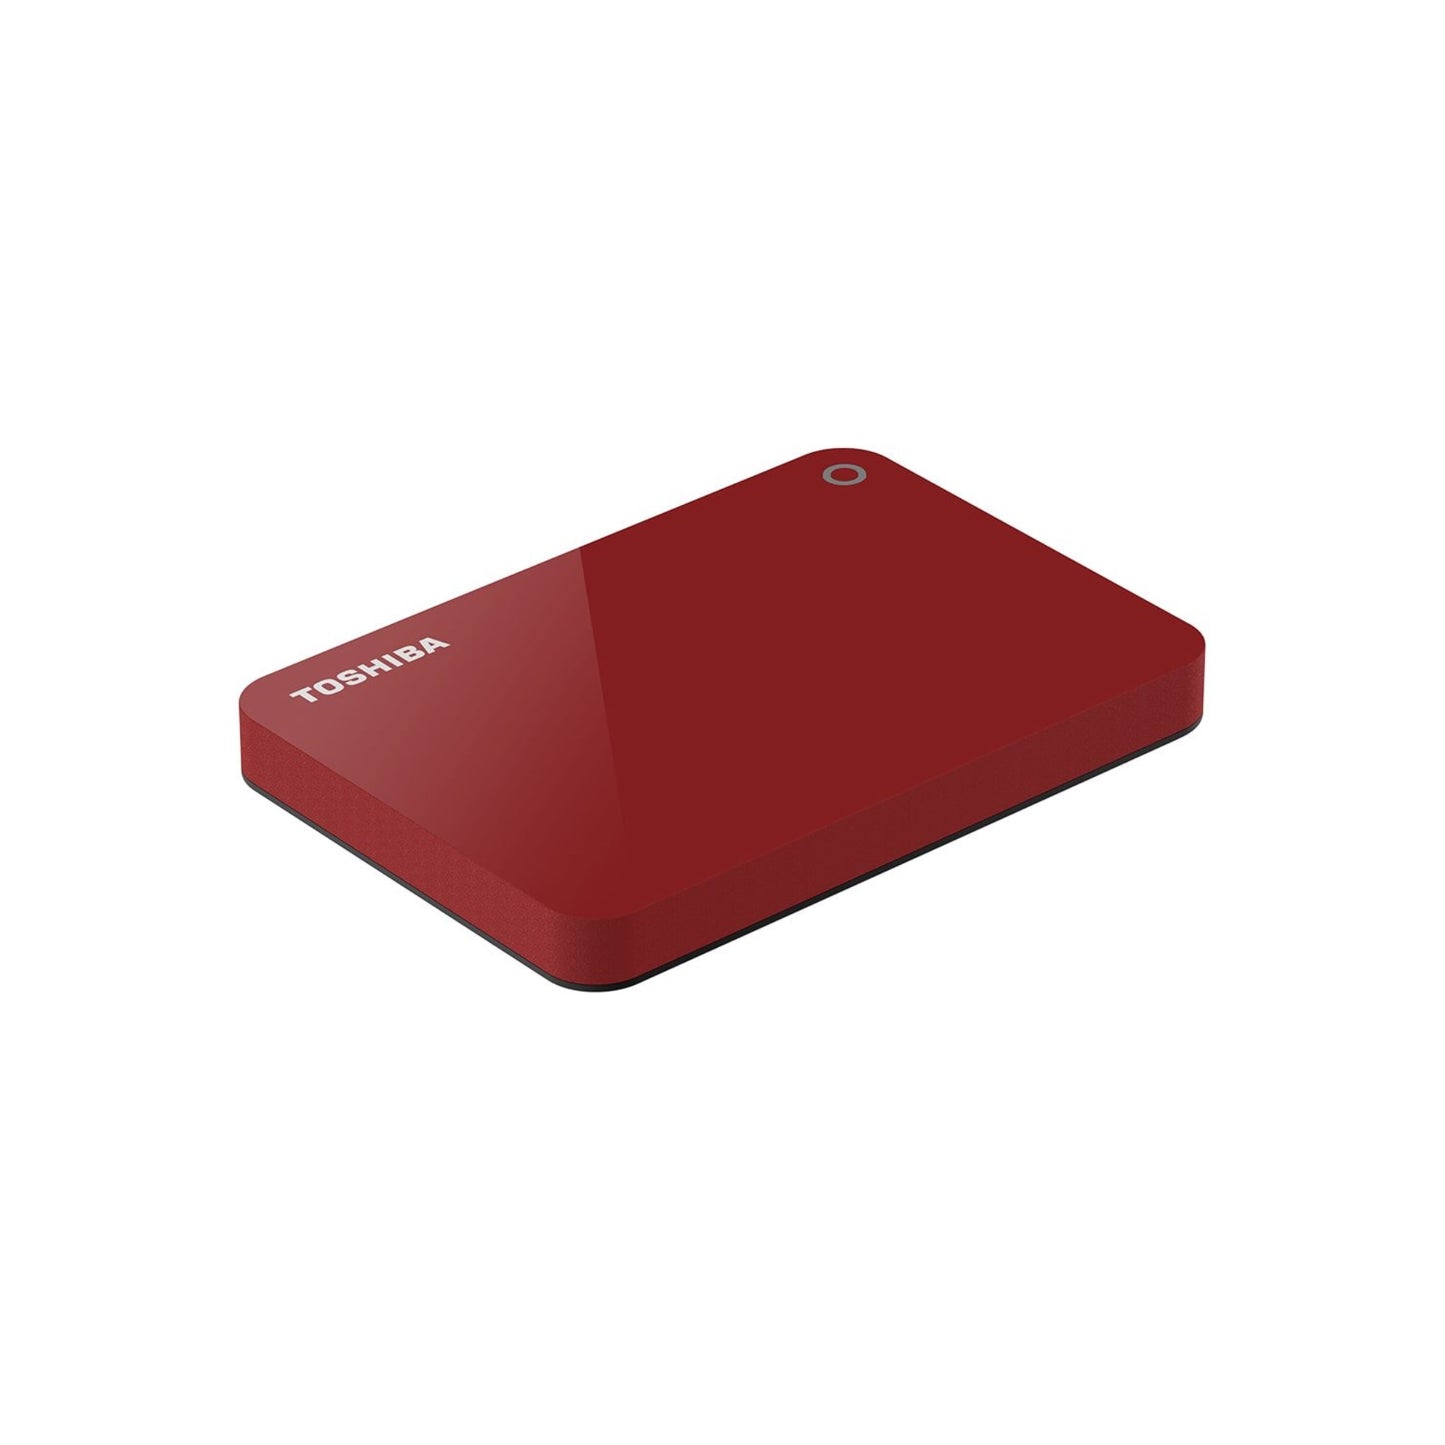 TOSHIBA Canvio Connect 3.0 V9 Hard Drive 2TB - Red